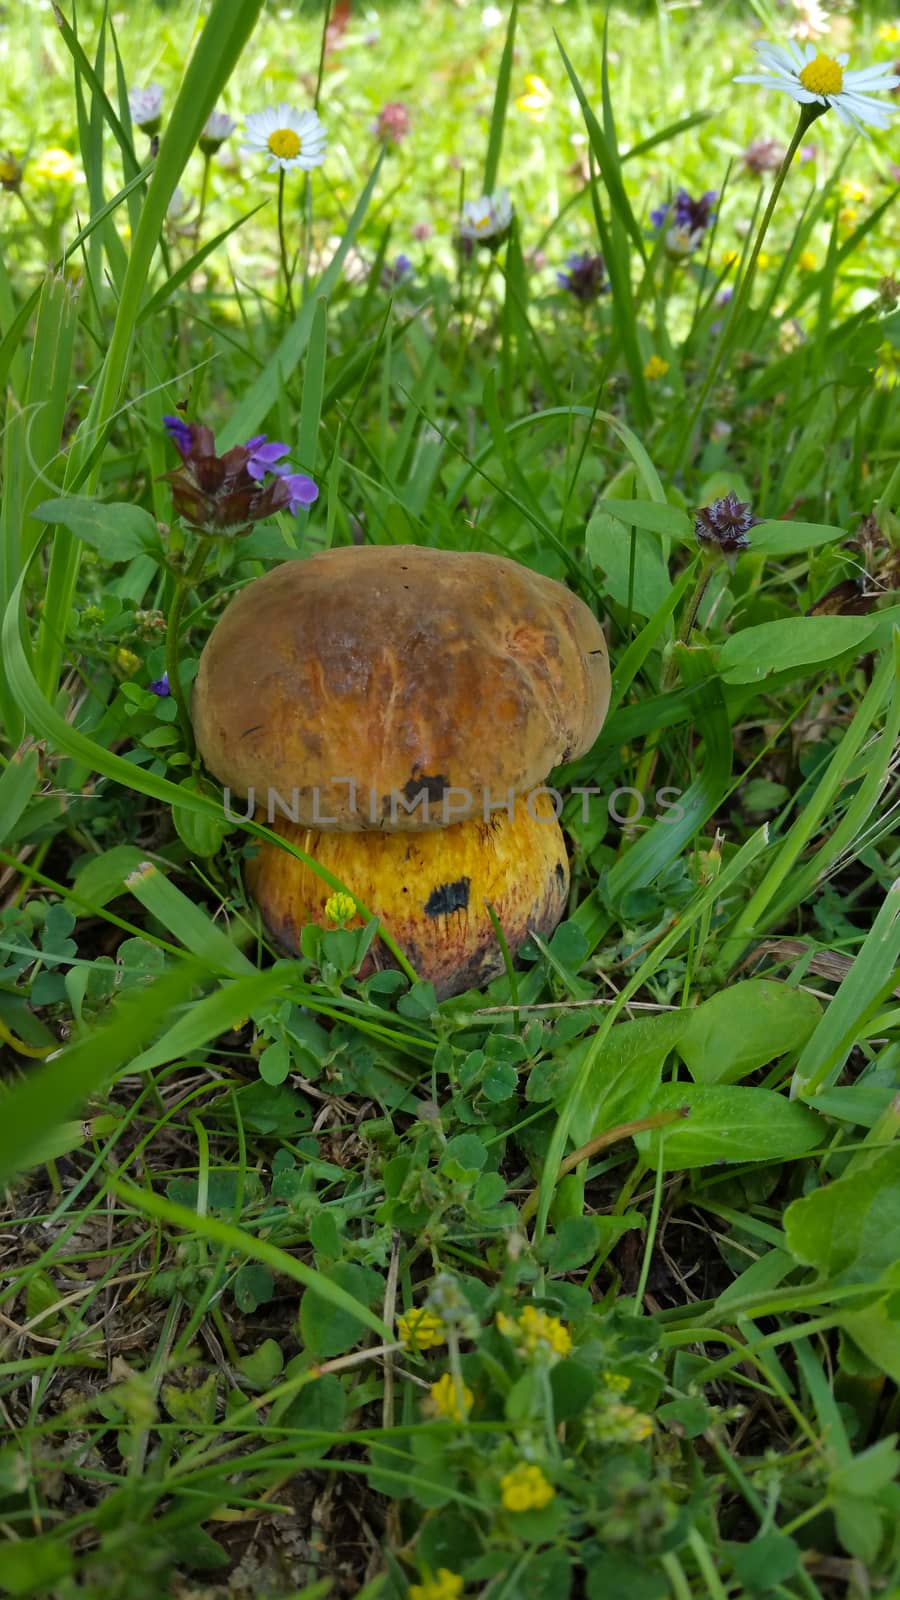 boletus mushroom hiding in the green grass in the shade